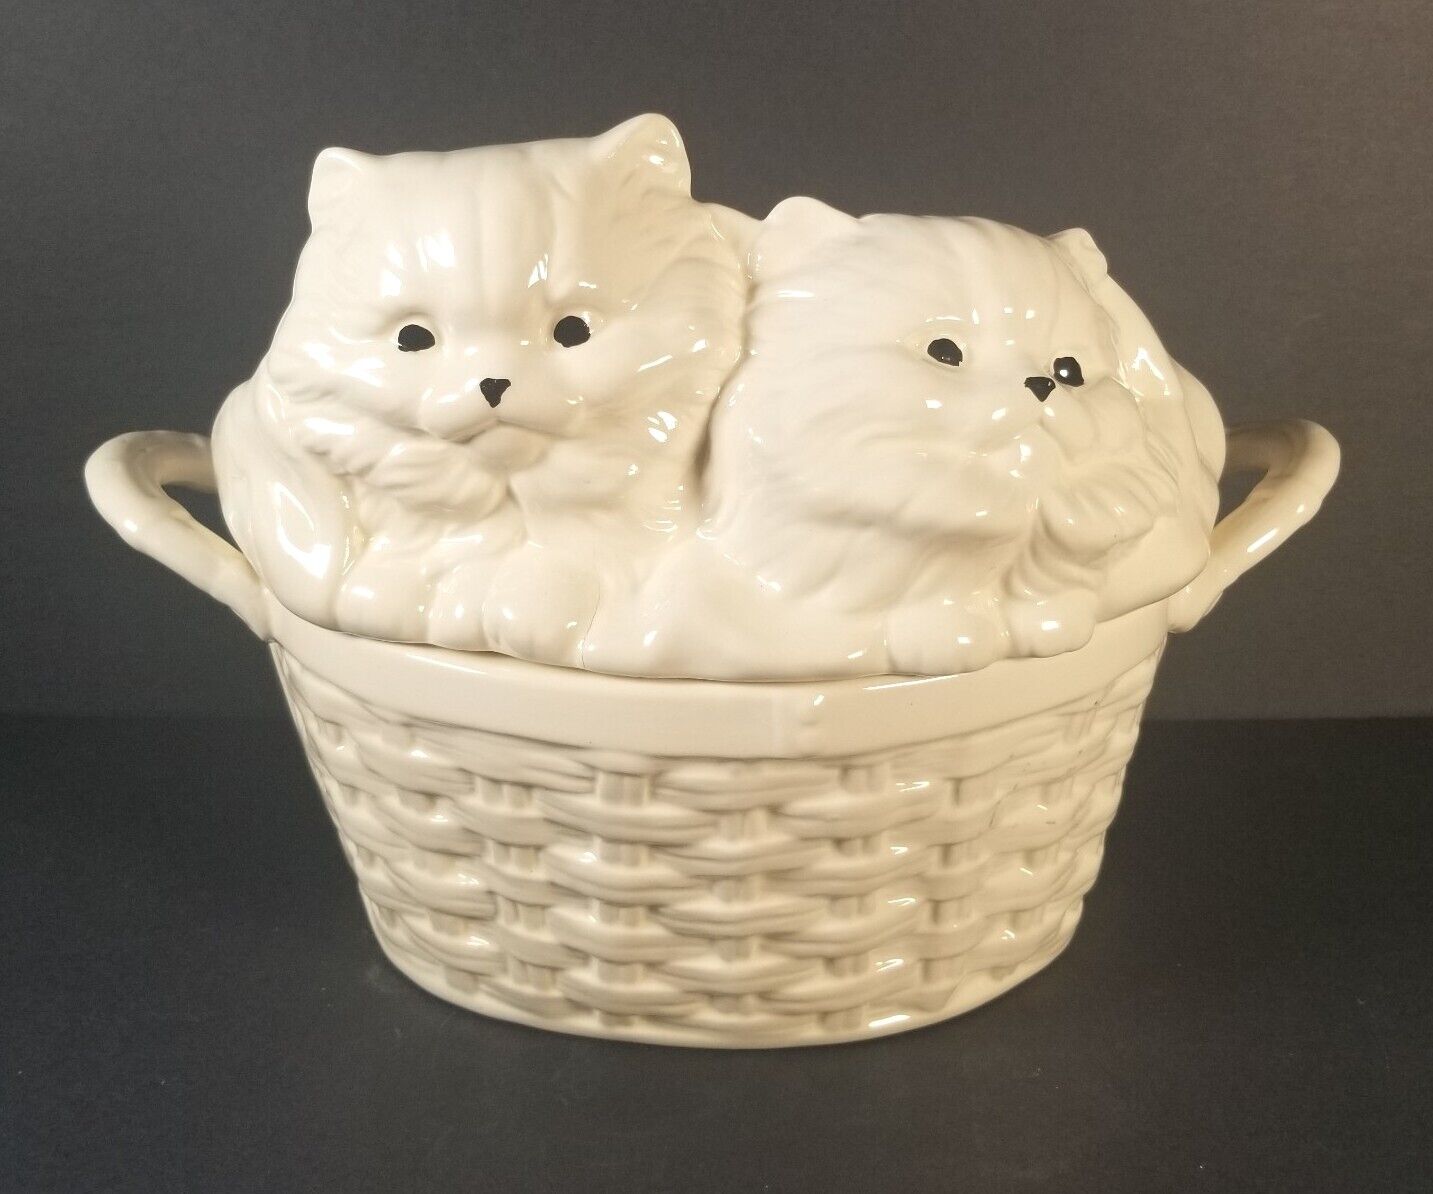 Vintage Mcm Alberta Mold Kittens Basket Cookie Jar White Kitty Cats Kitsch Retro